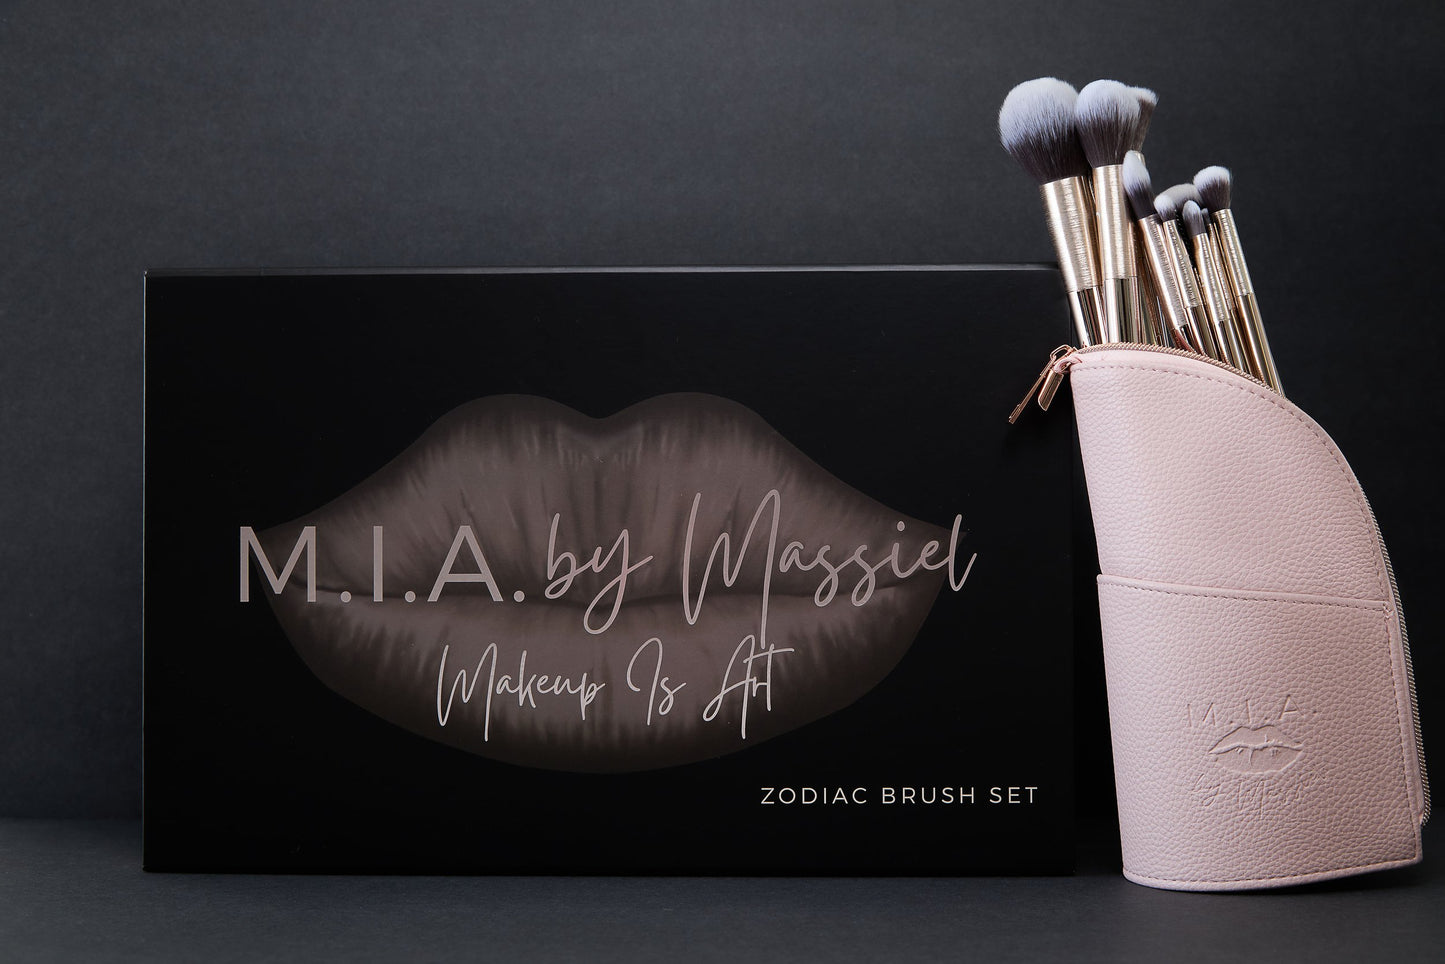 M.I.A. by Massiel Zodiac brush set